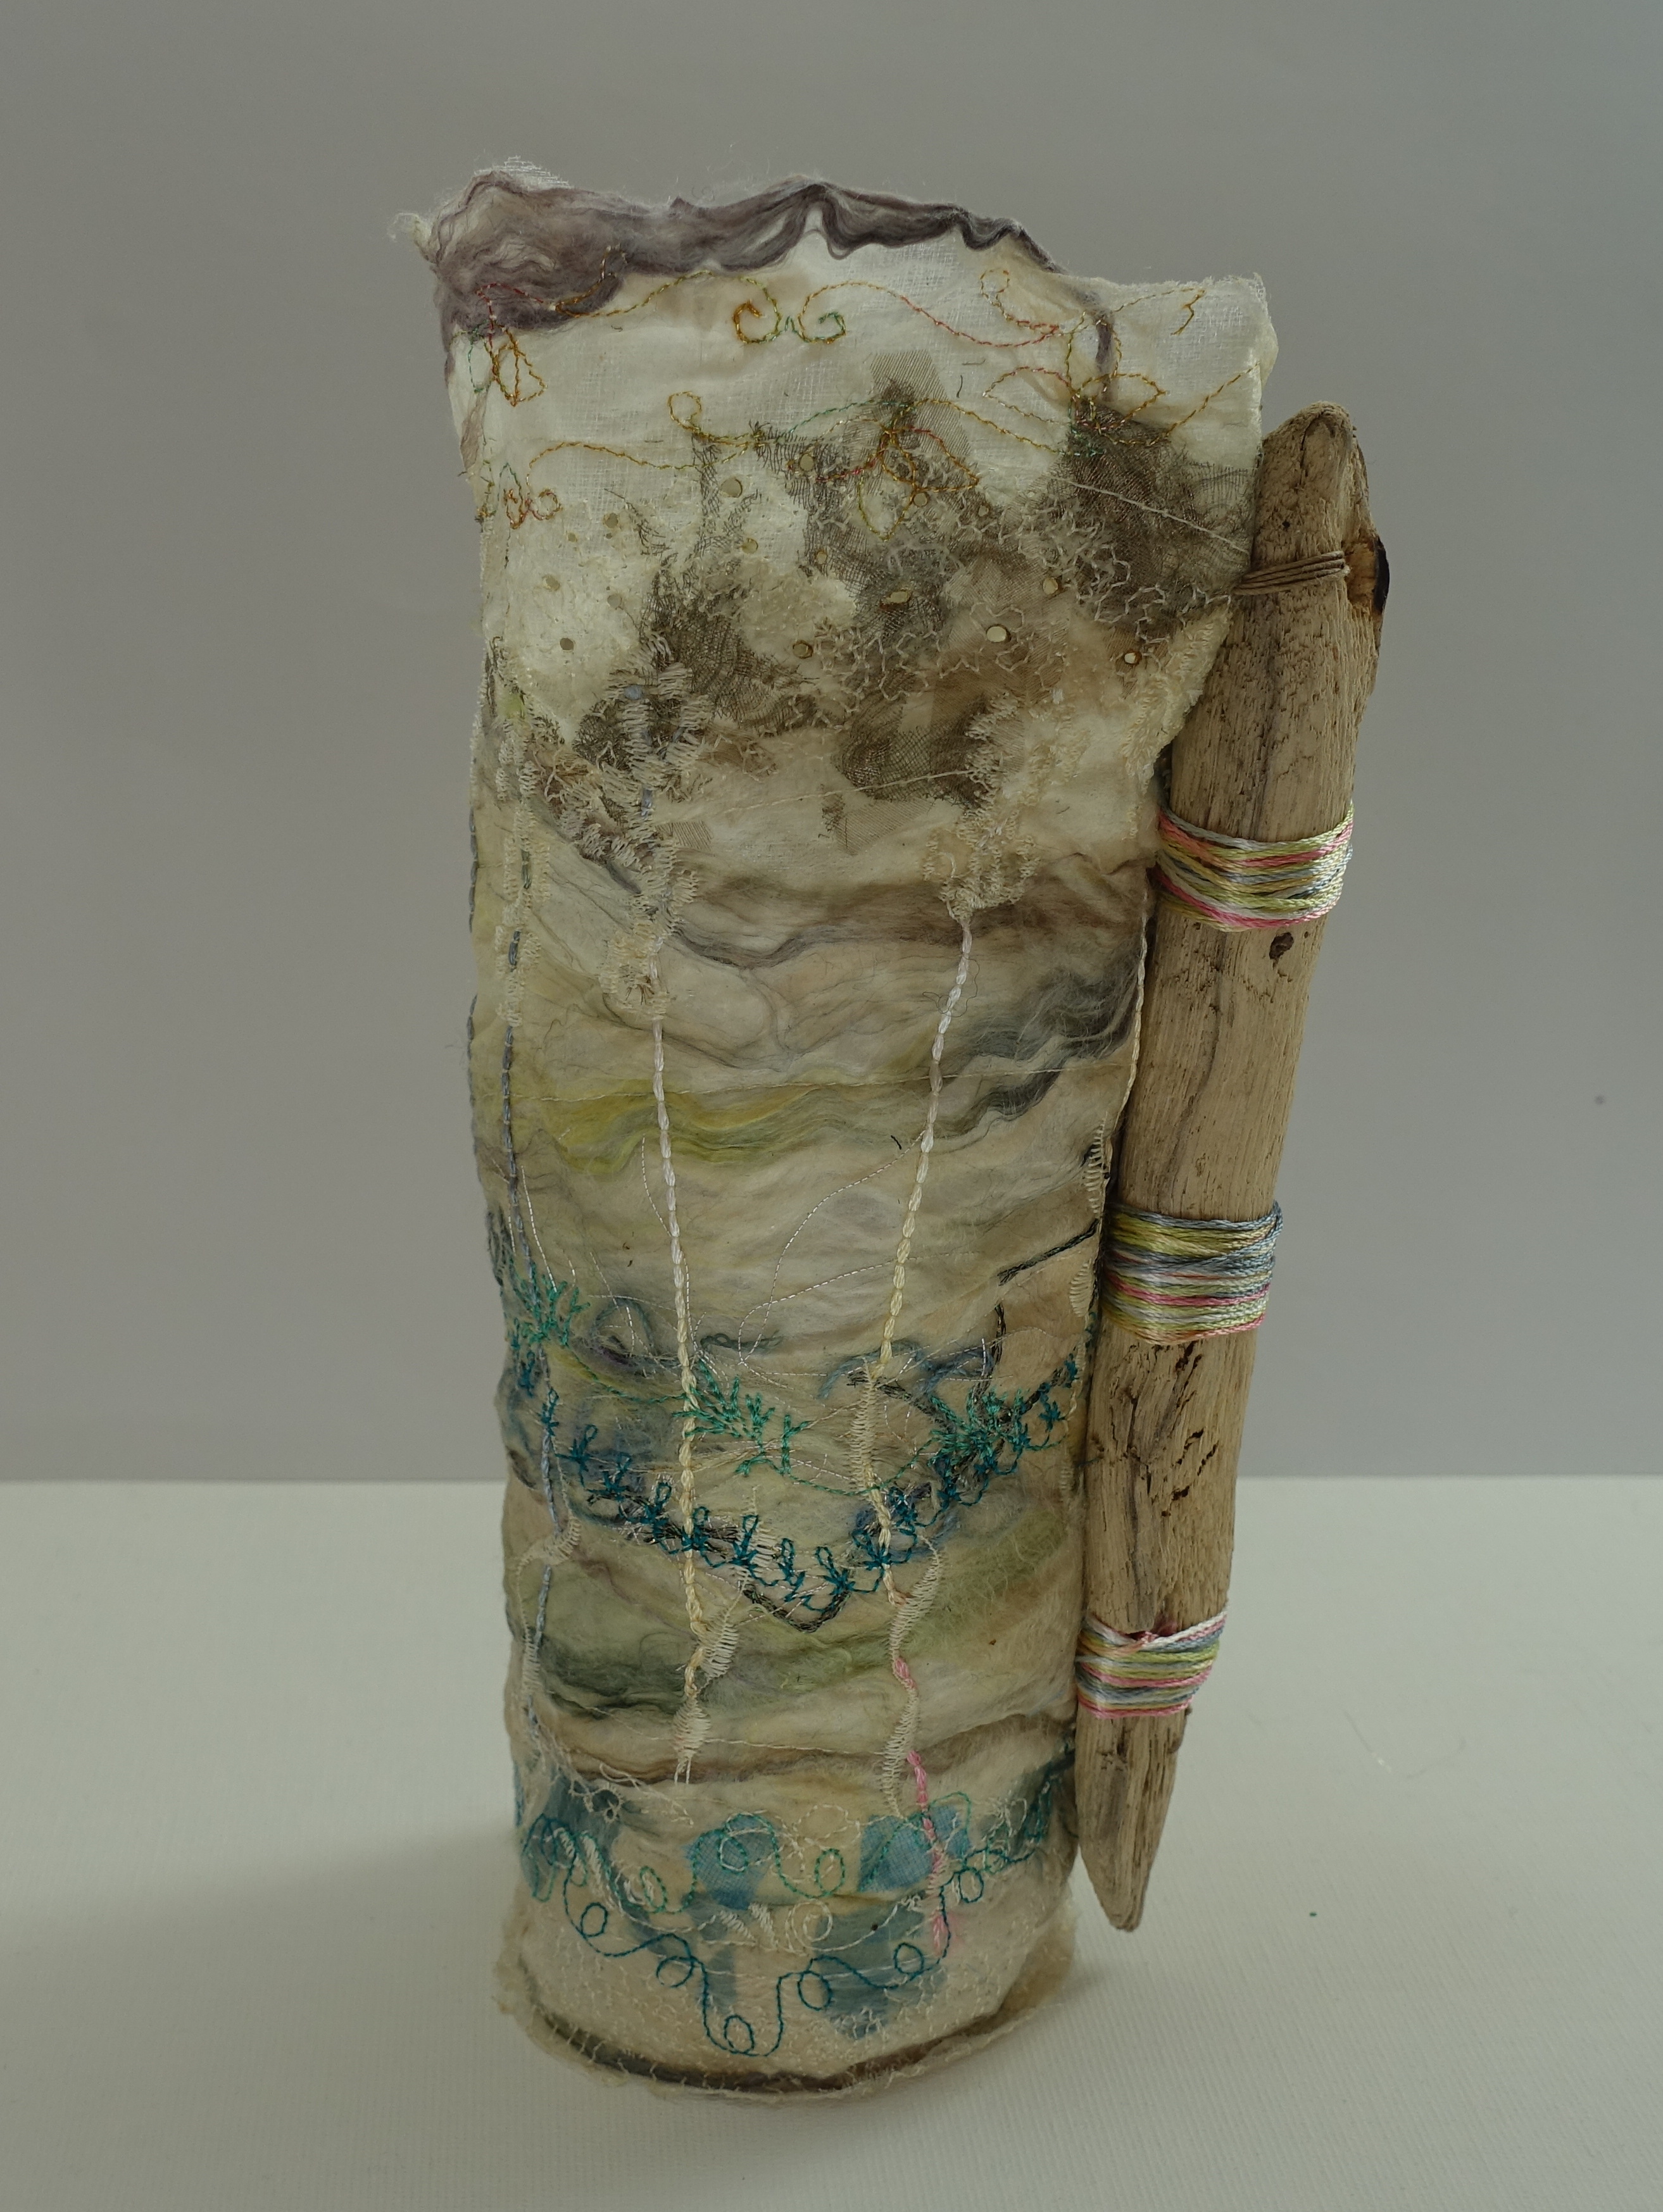 Title Driftwood Medium Vase
Price £25
Size 18-20cm
Silk Paper Vase with Glass Insert